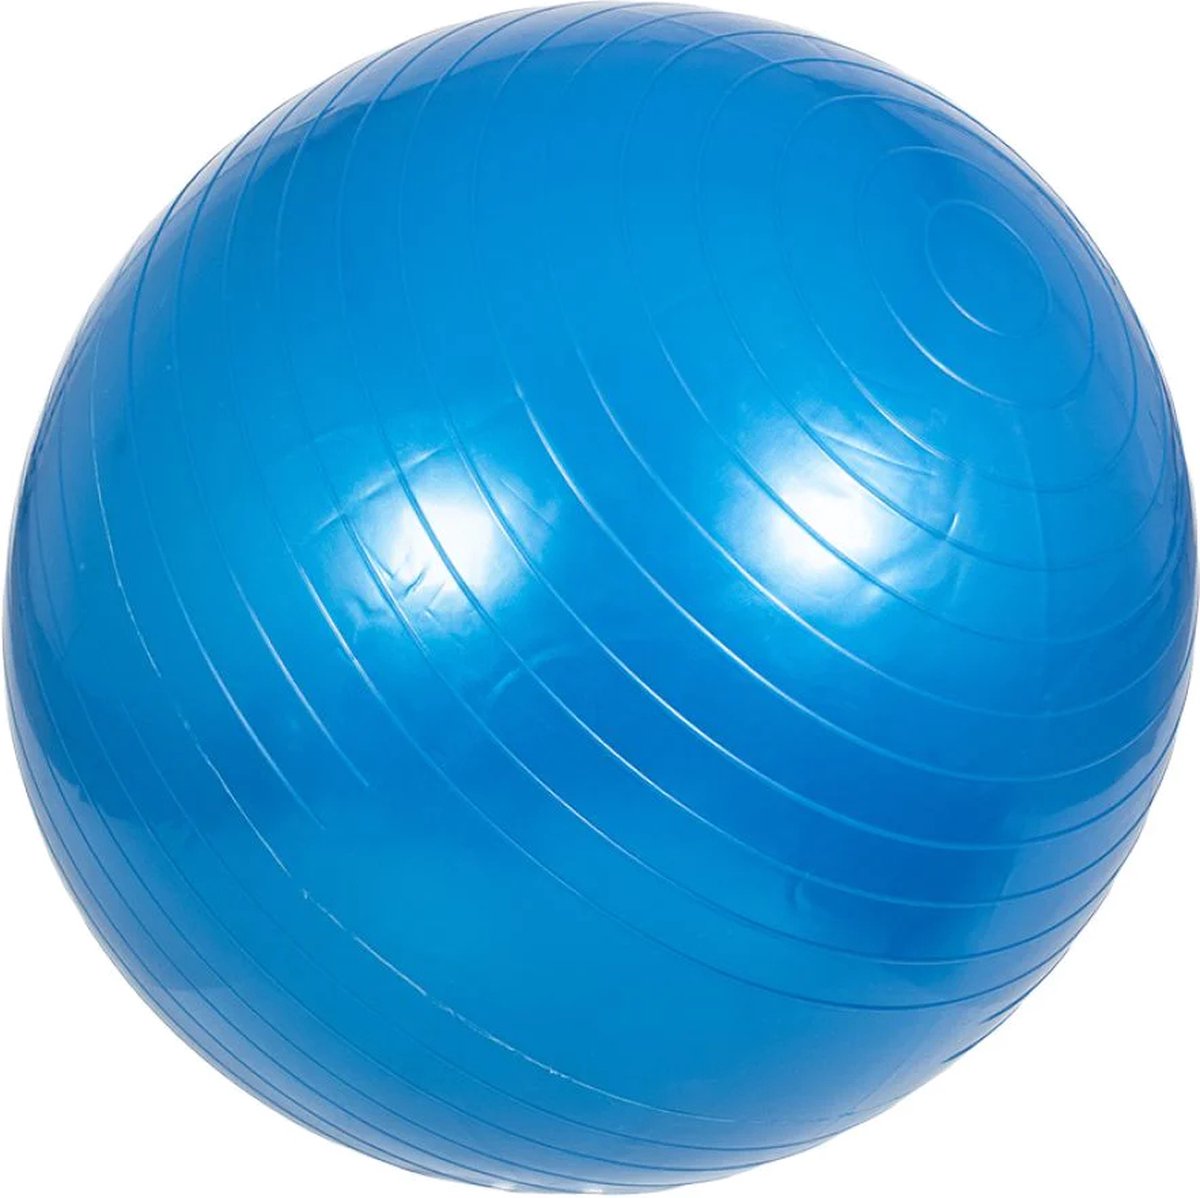 Yoga bal Healthy Sports - pilates bal - Gym bal 65cm - Inclusief pomp